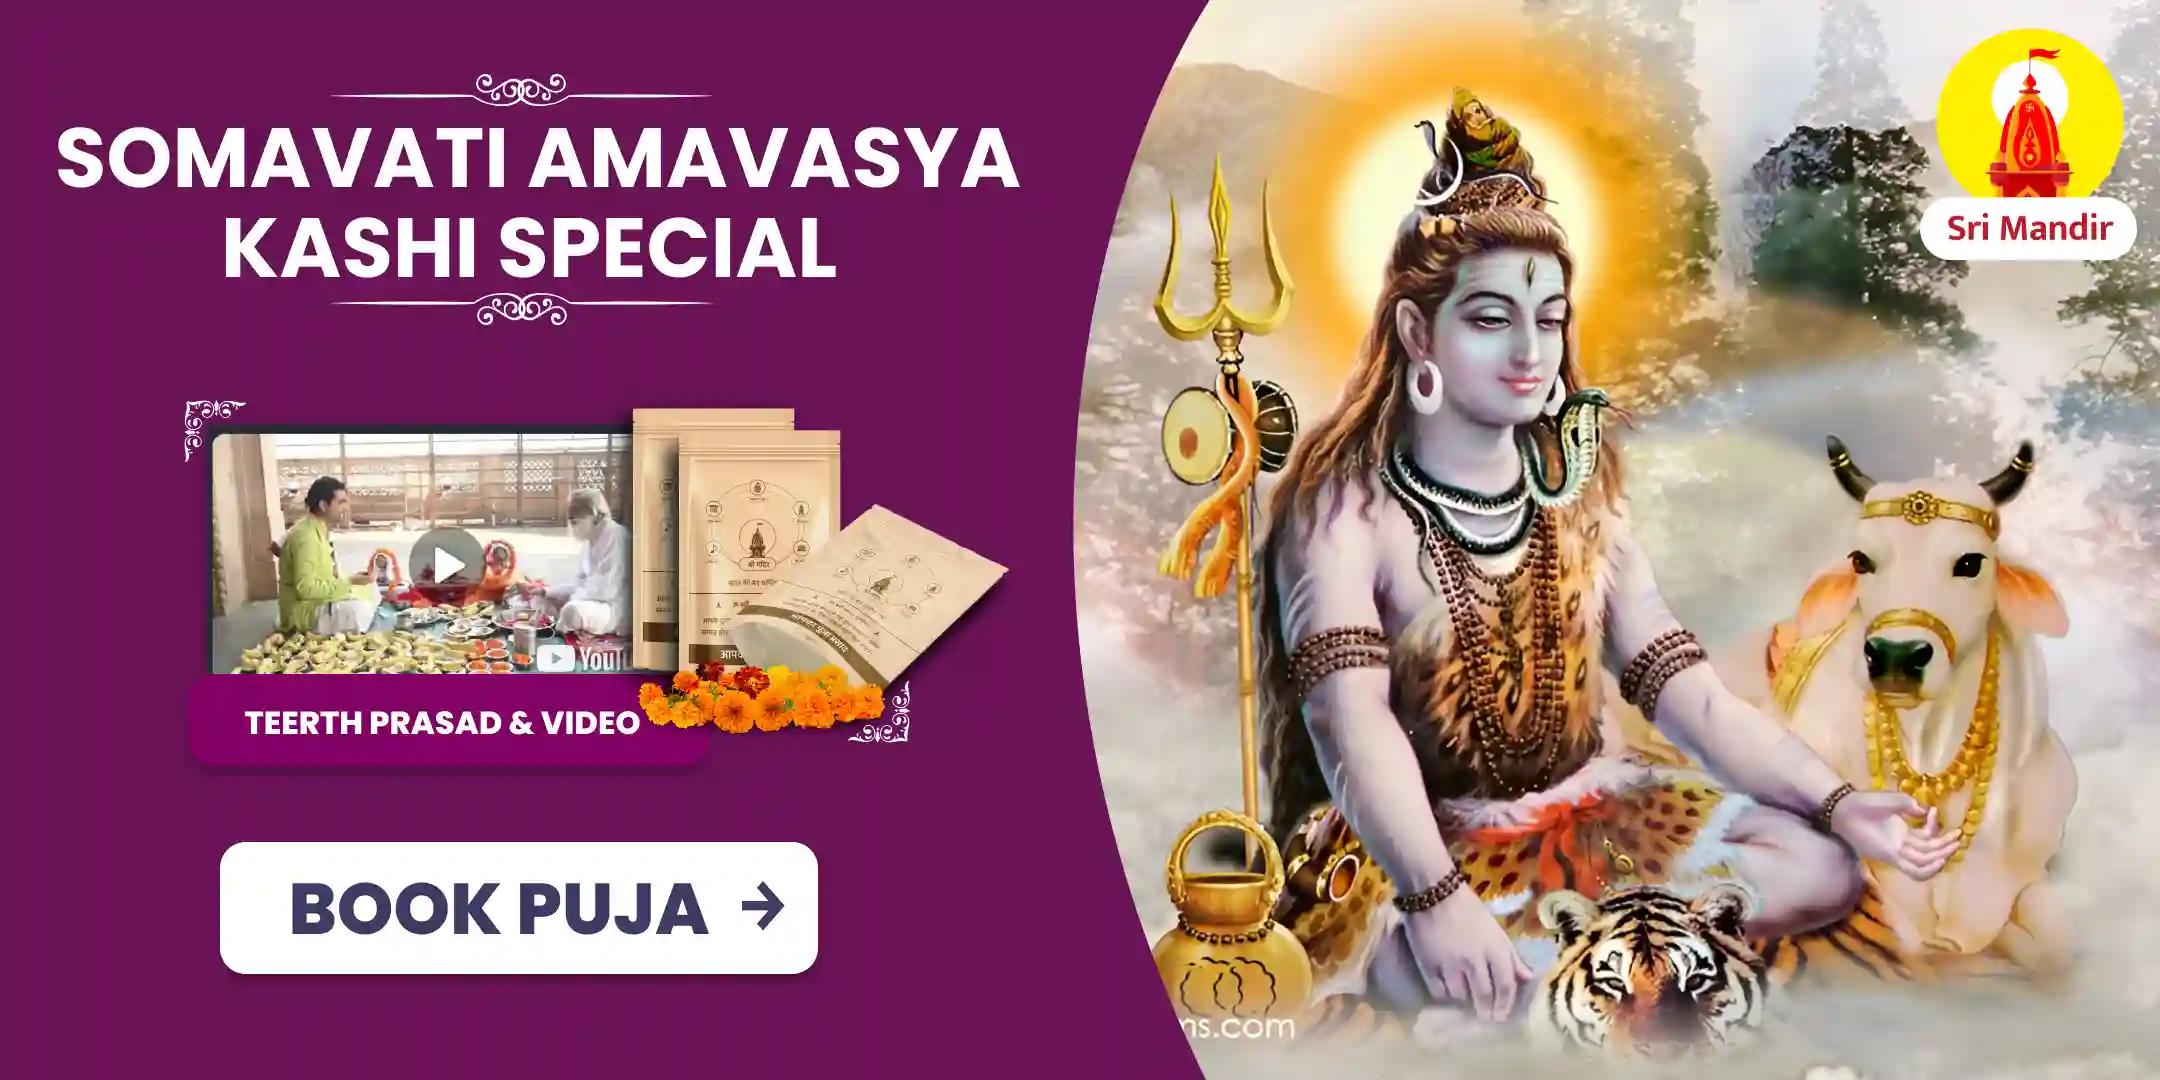 Somavati Amavasya Kashi Special Shri Rudra Kavach Yagya and Mahamrityunjay Path For Protection from Premature Death, Diseases and Life Threats